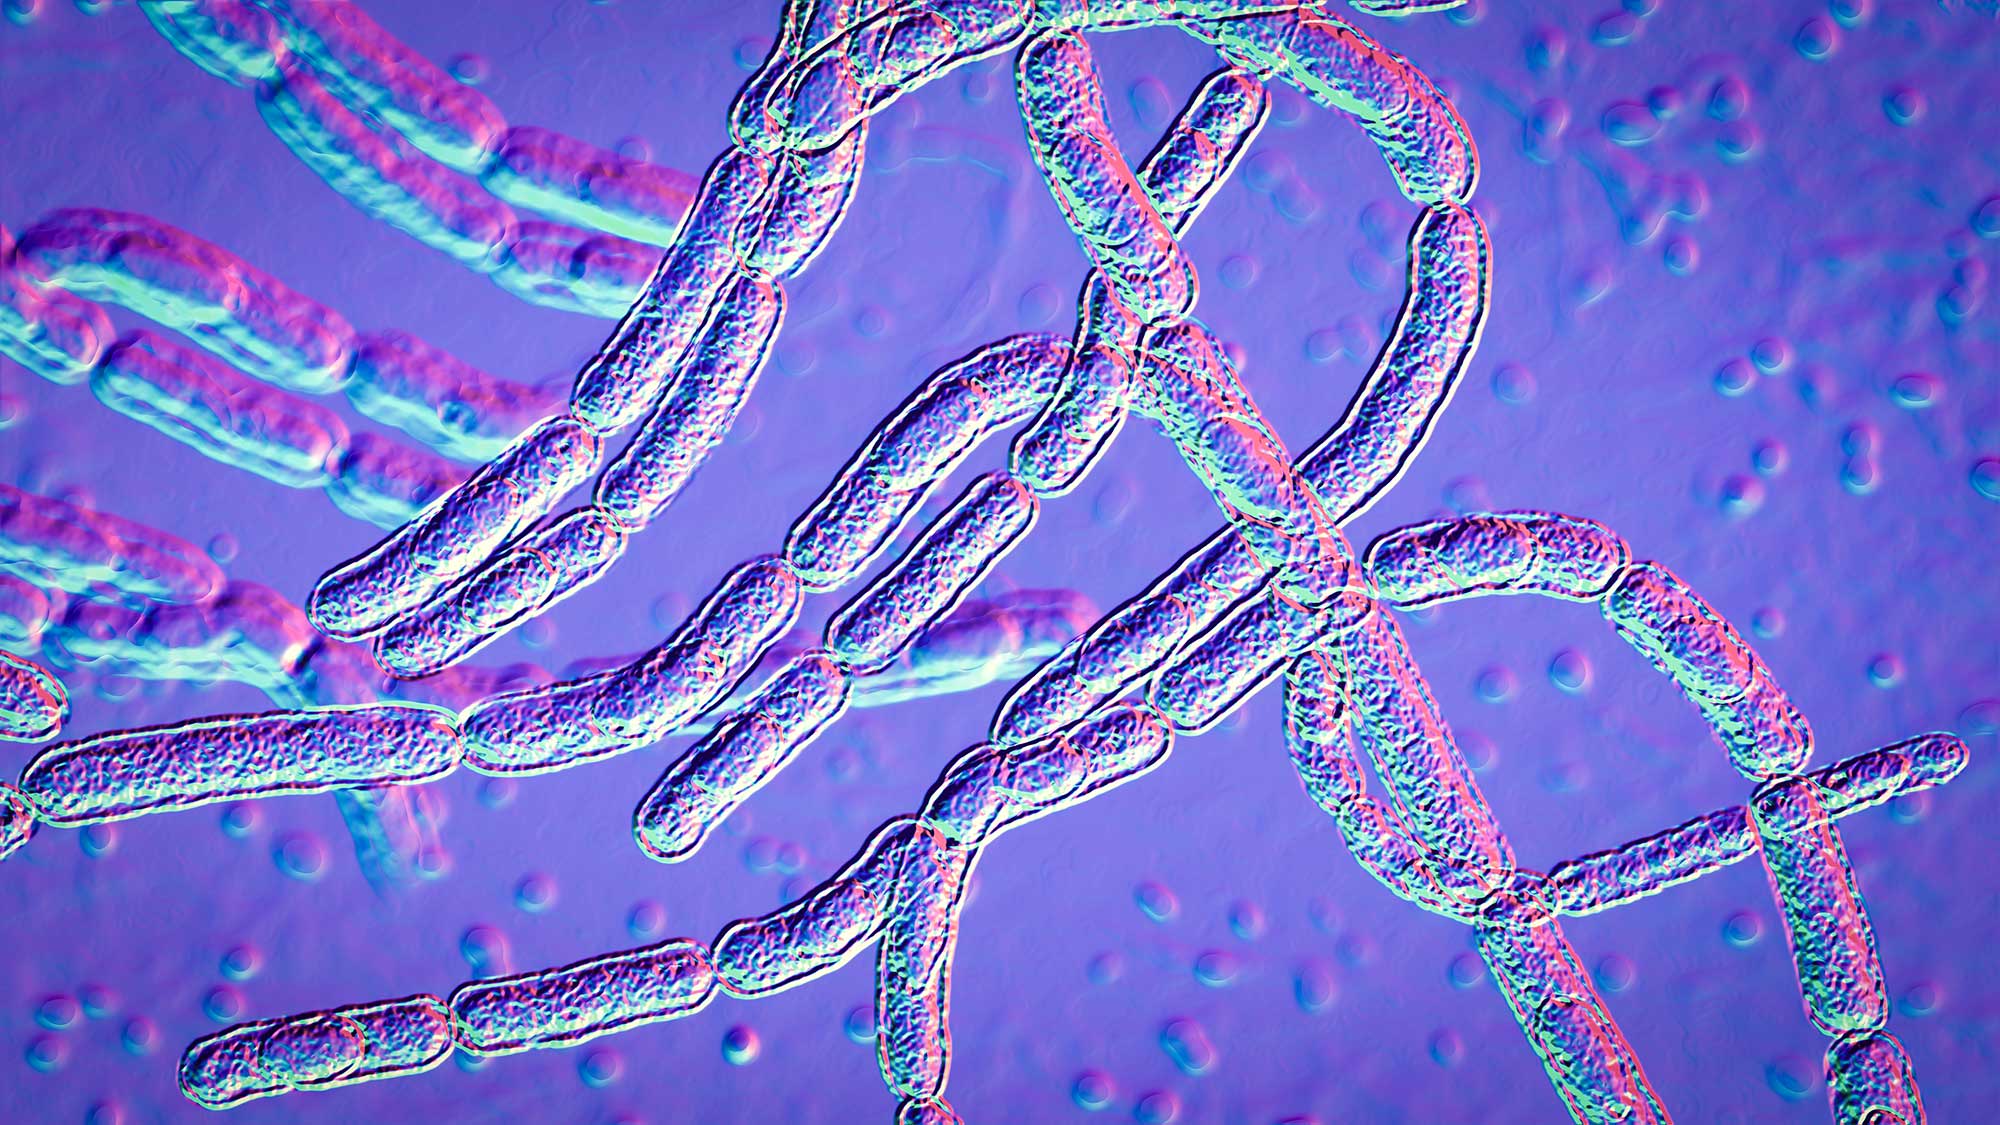 Anthrax Bacillus Anthracis Bertin Environics 1720